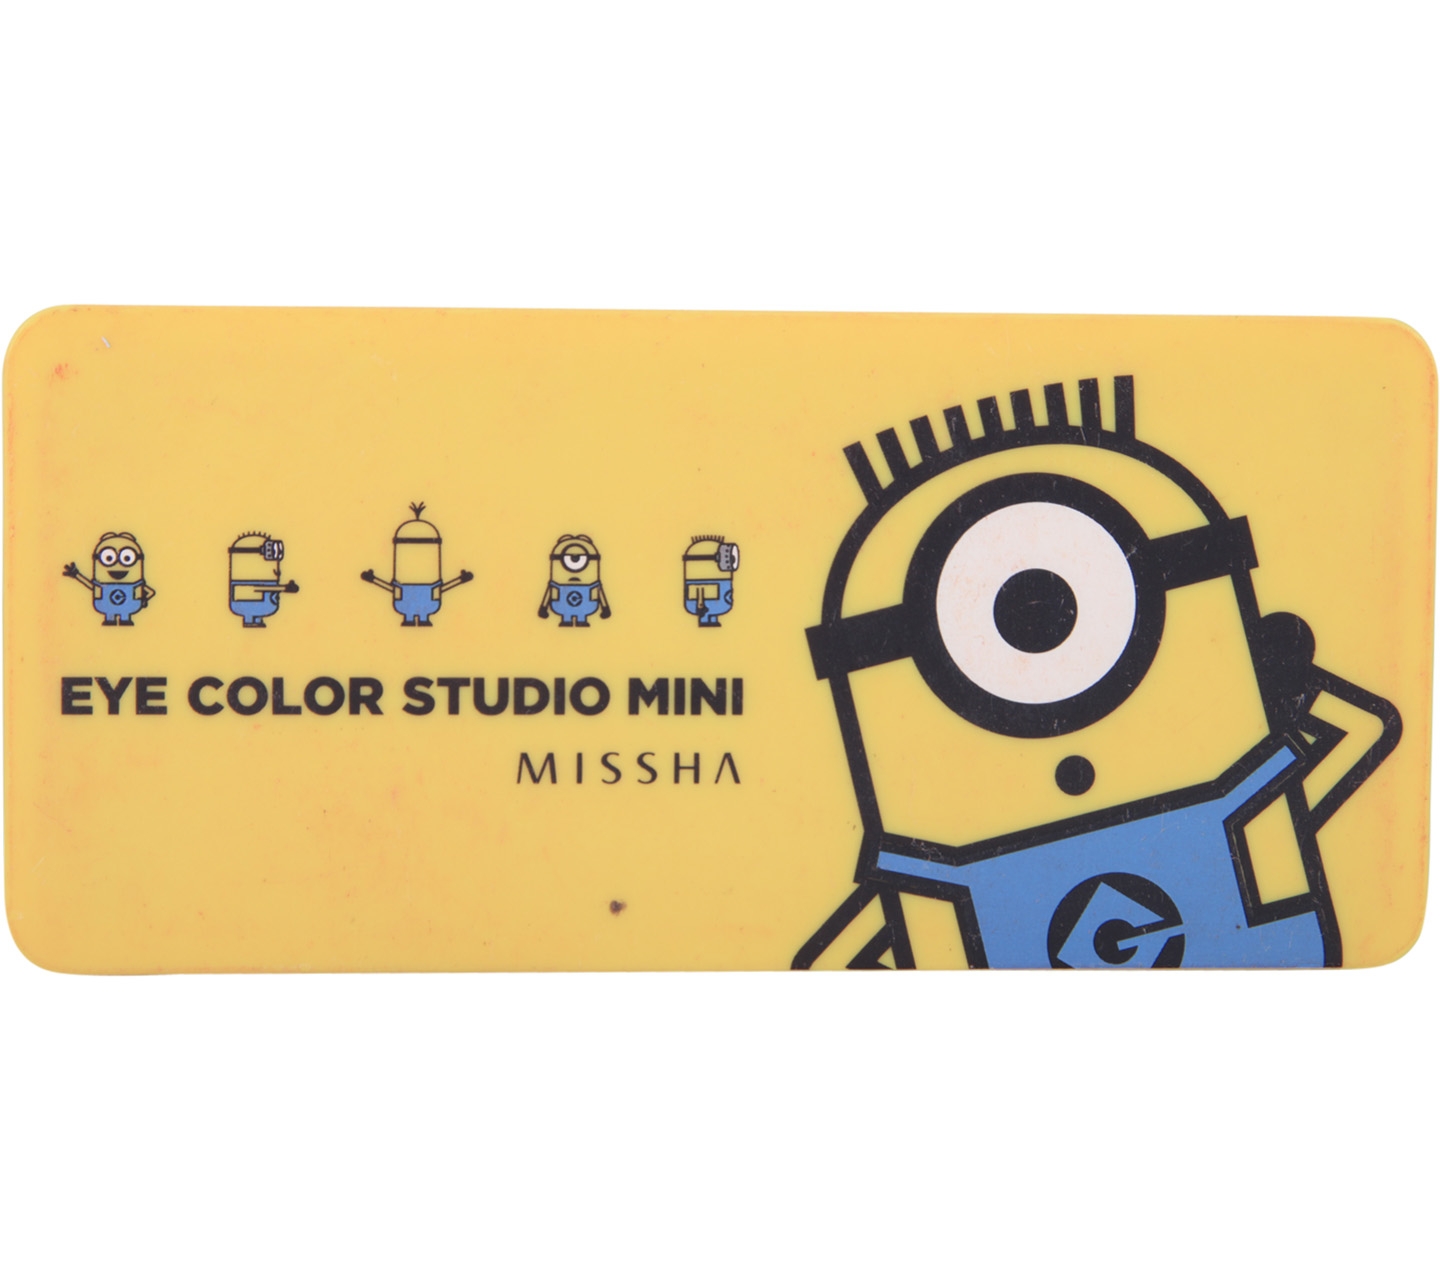 Missha Eye Color Studio Mini Sets and Palette